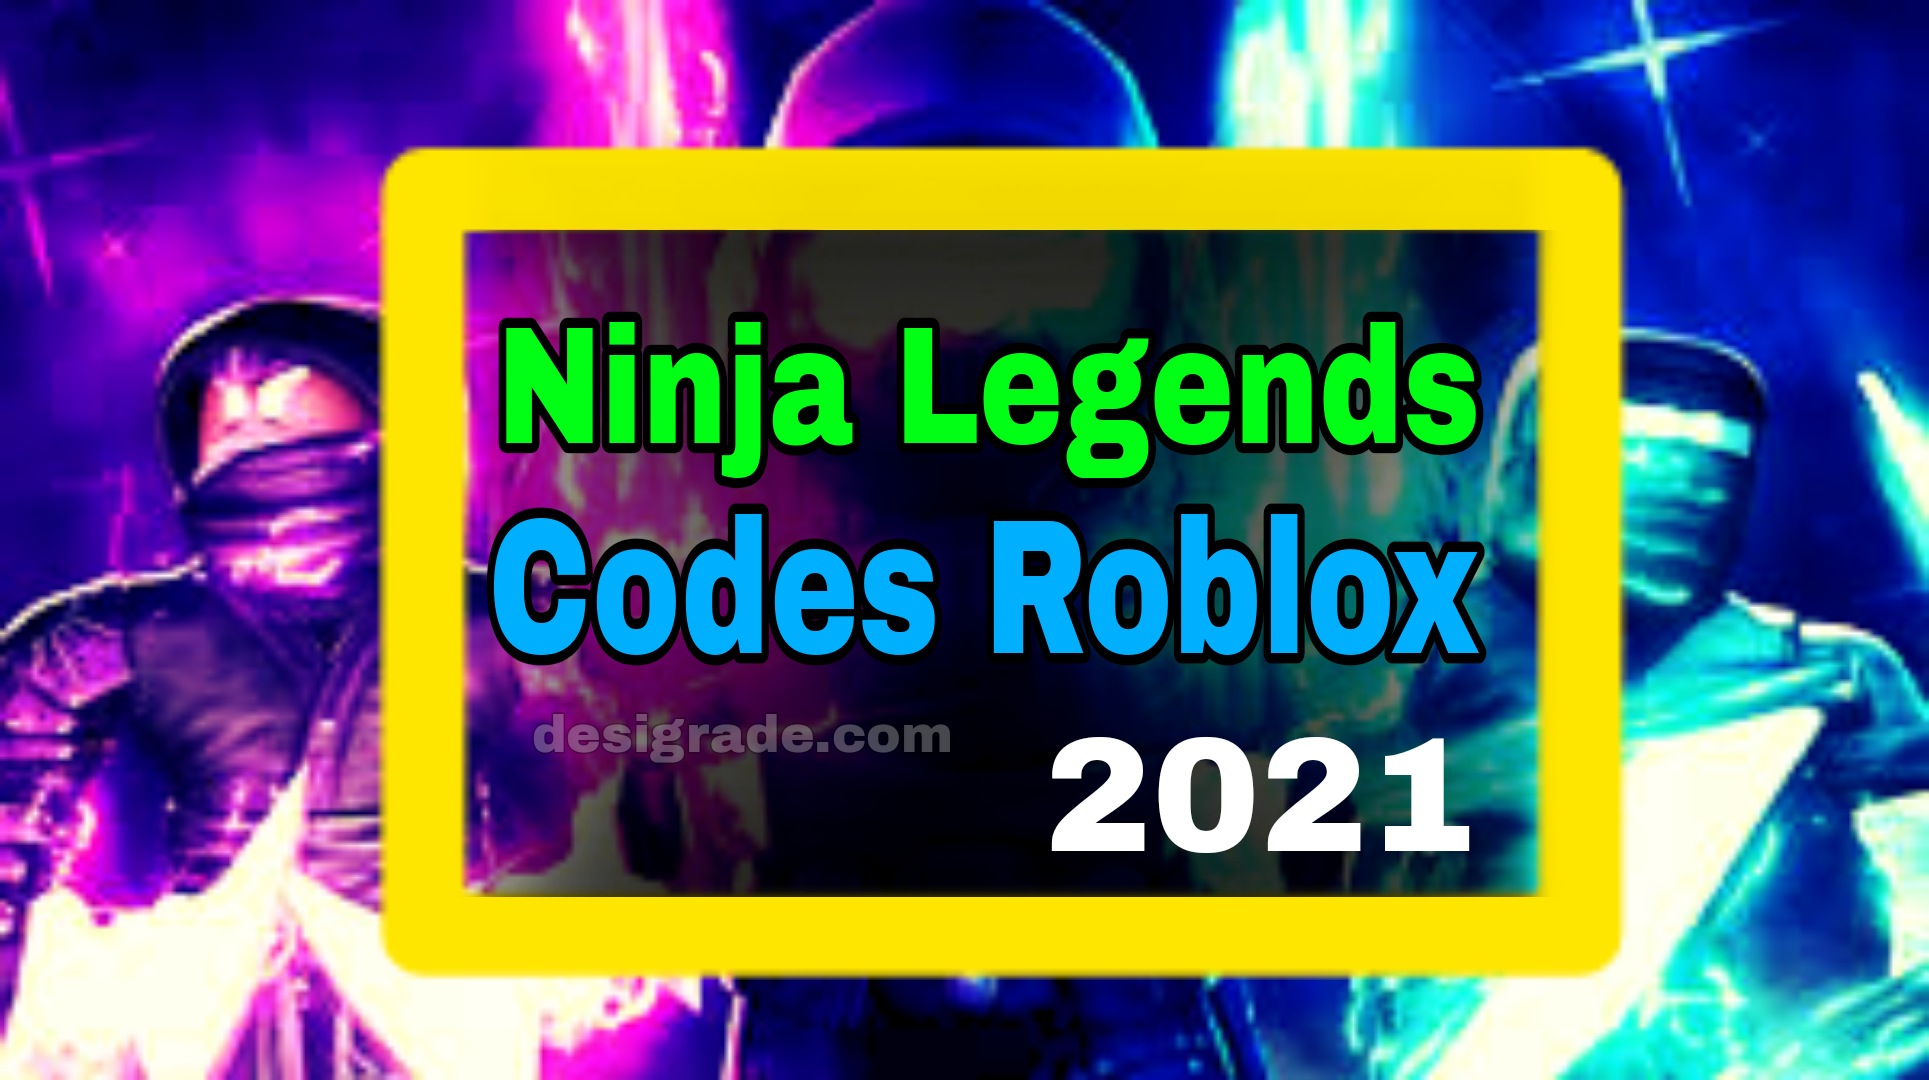 Ninja Legends Codes Roblox December 2020 How To Get More Pets And Coins Desi Grade - roblox ninja legends codes 2020